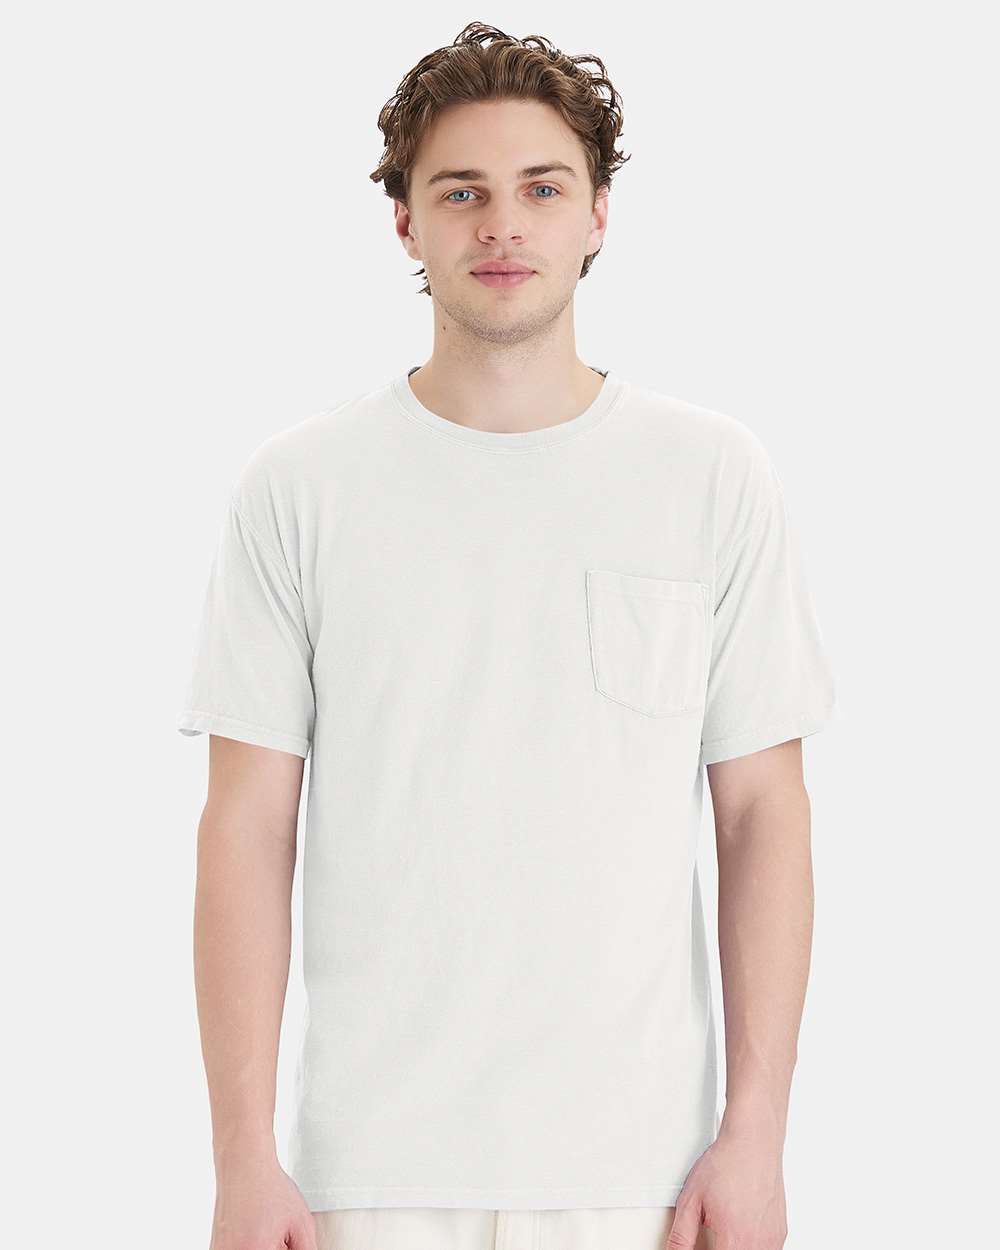 Brandmand Installation kål ComfortWash by Hanes GDH150 - Garment-Dyed Pocket T-Shirt